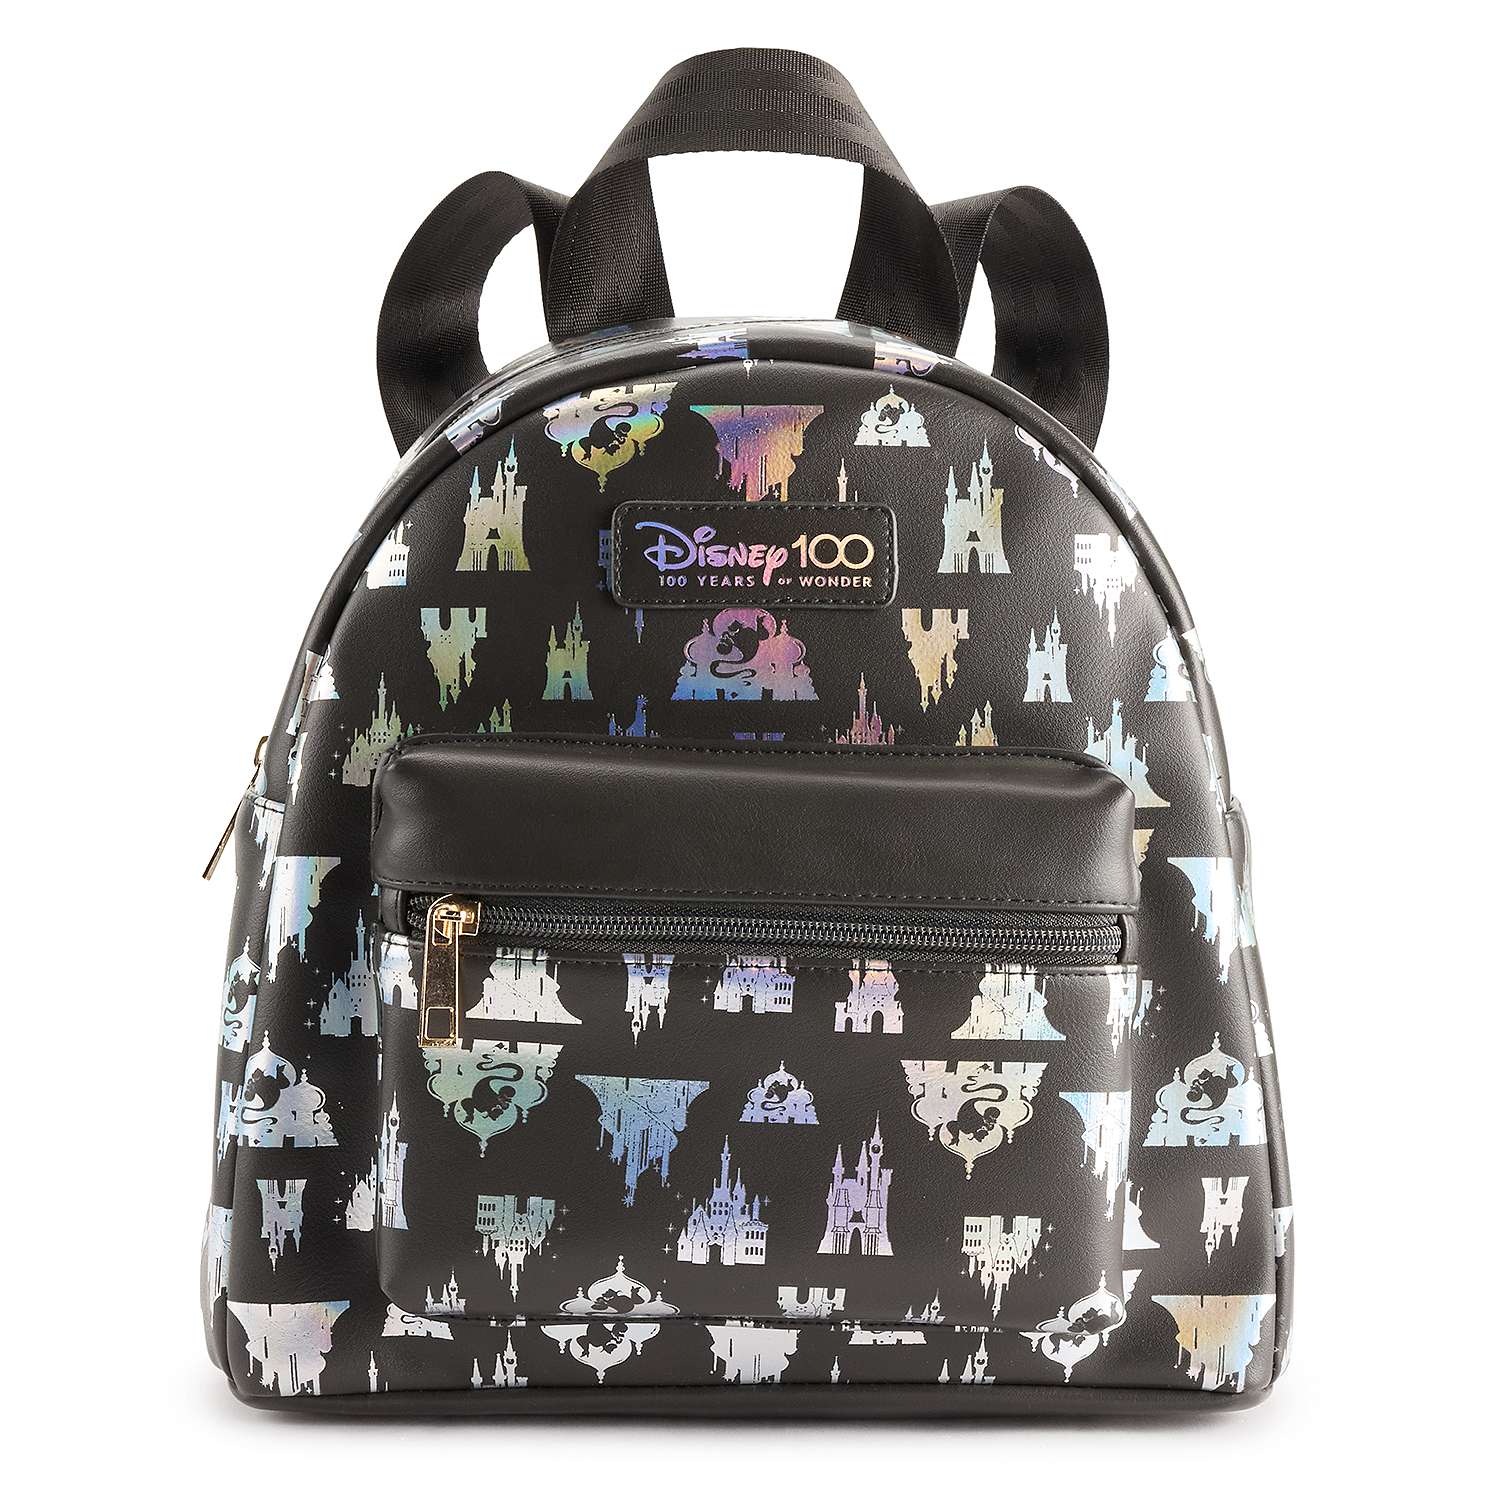 Disney Women's Disney 100th Princess Castles Mini Backpack $14.45 & More + Free Store Pickup at Kohl's or F/S on Orders $49+